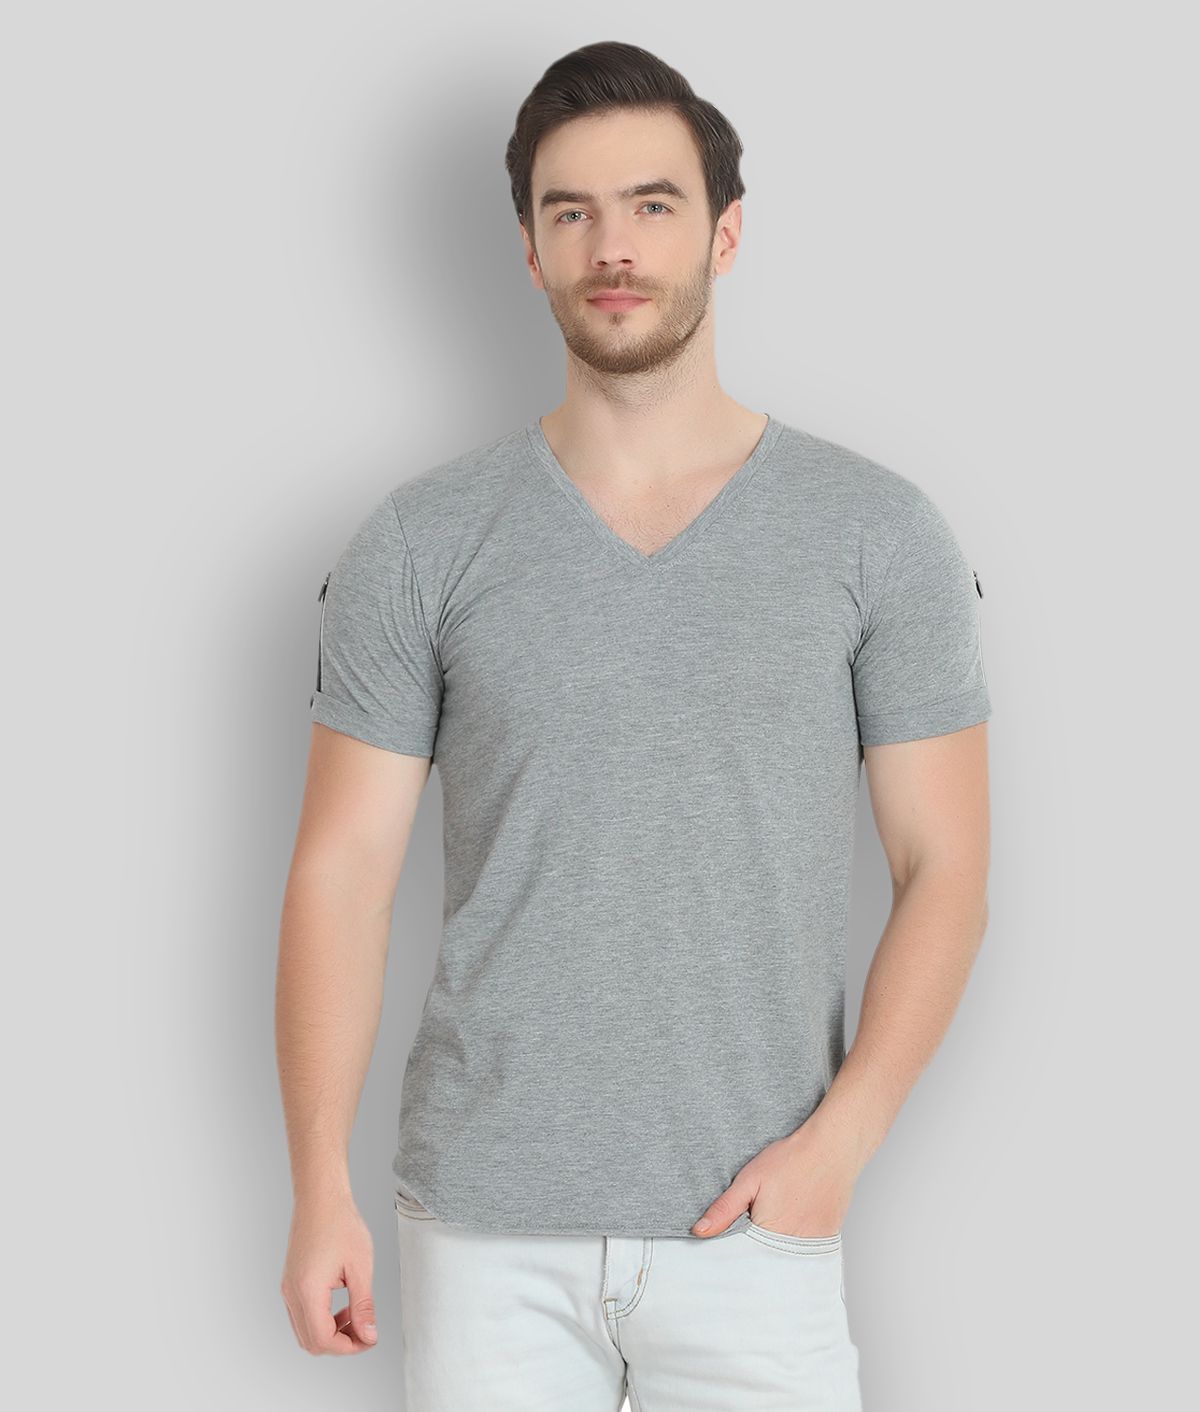     			Glito - Grey Cotton Blend Regular Fit Men's T-Shirt ( Pack of 1 )